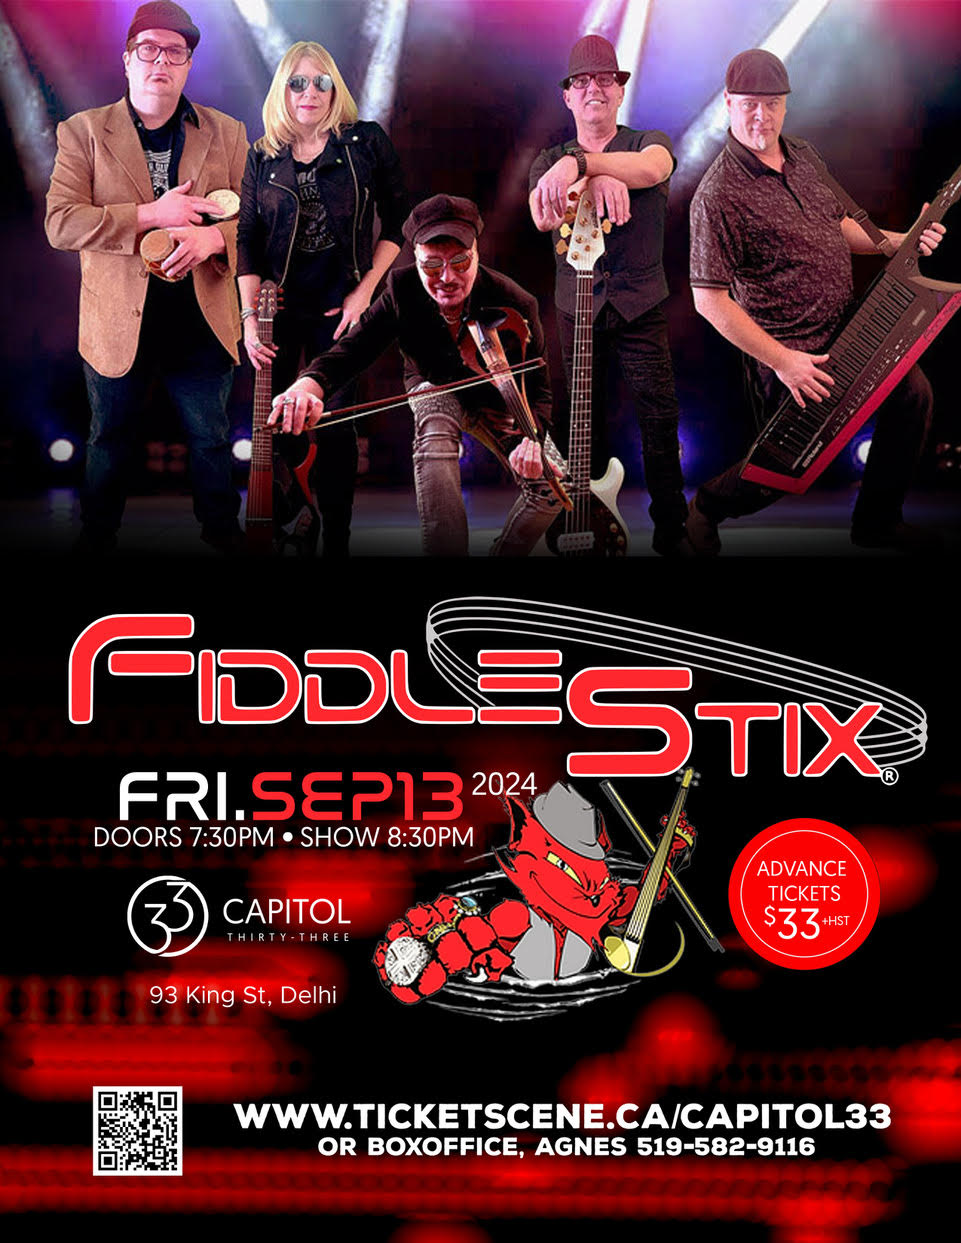 Fiddlestix Dance Party